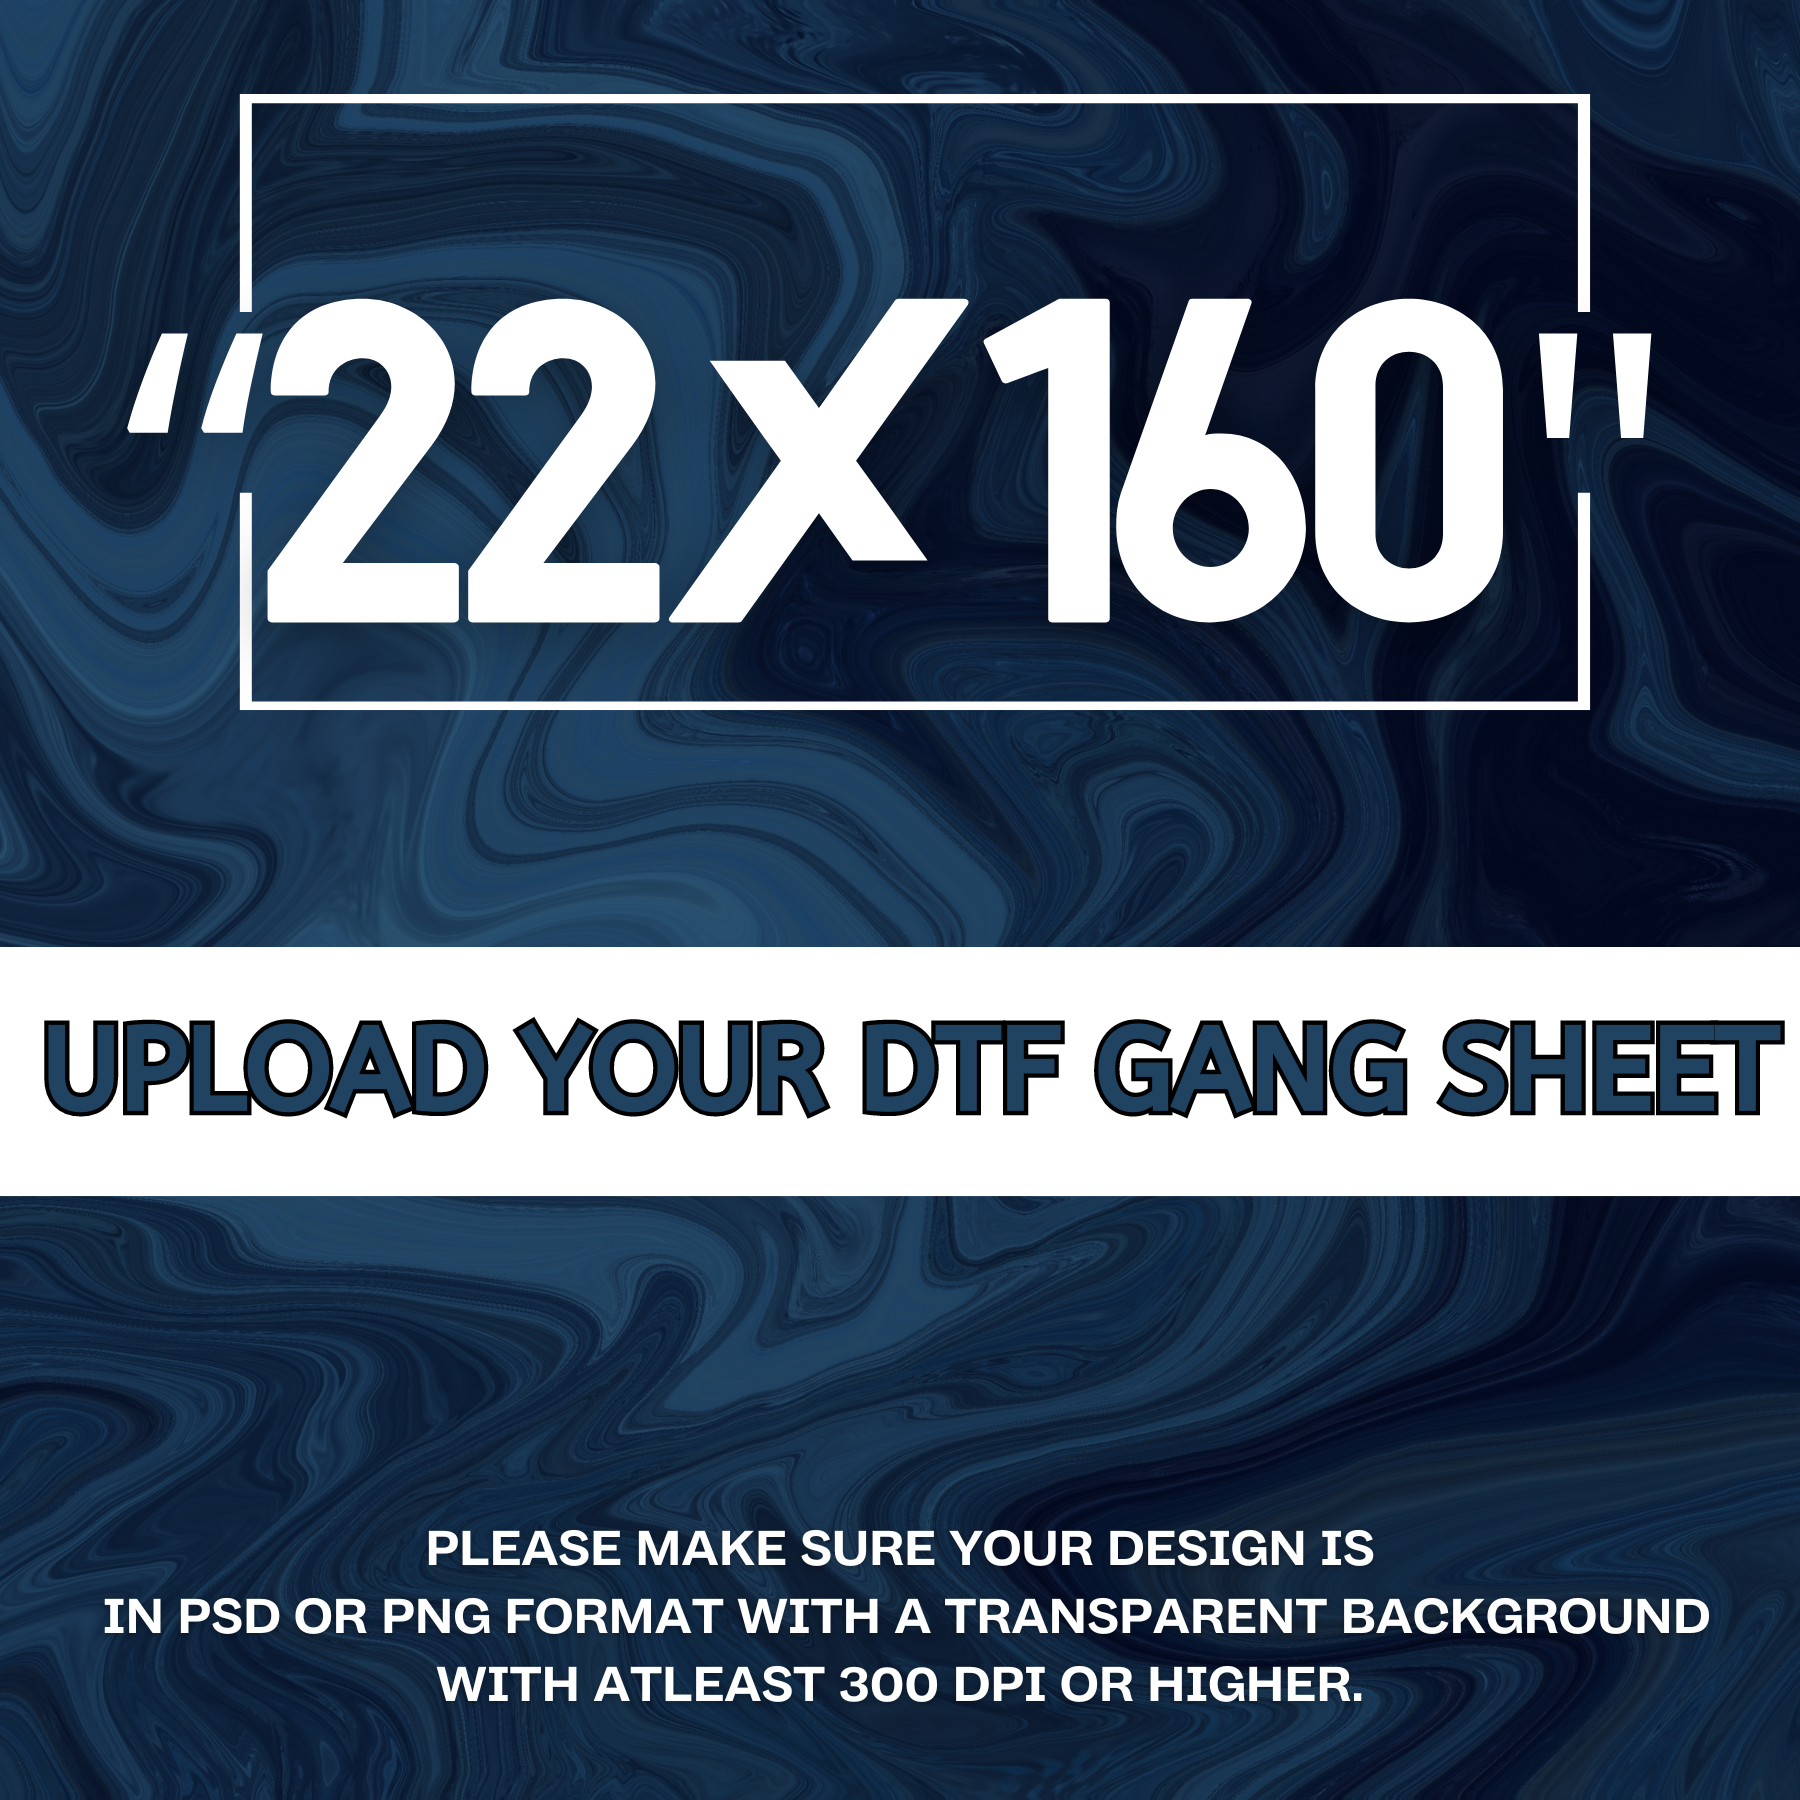 22 x 160 dtf gang sheet